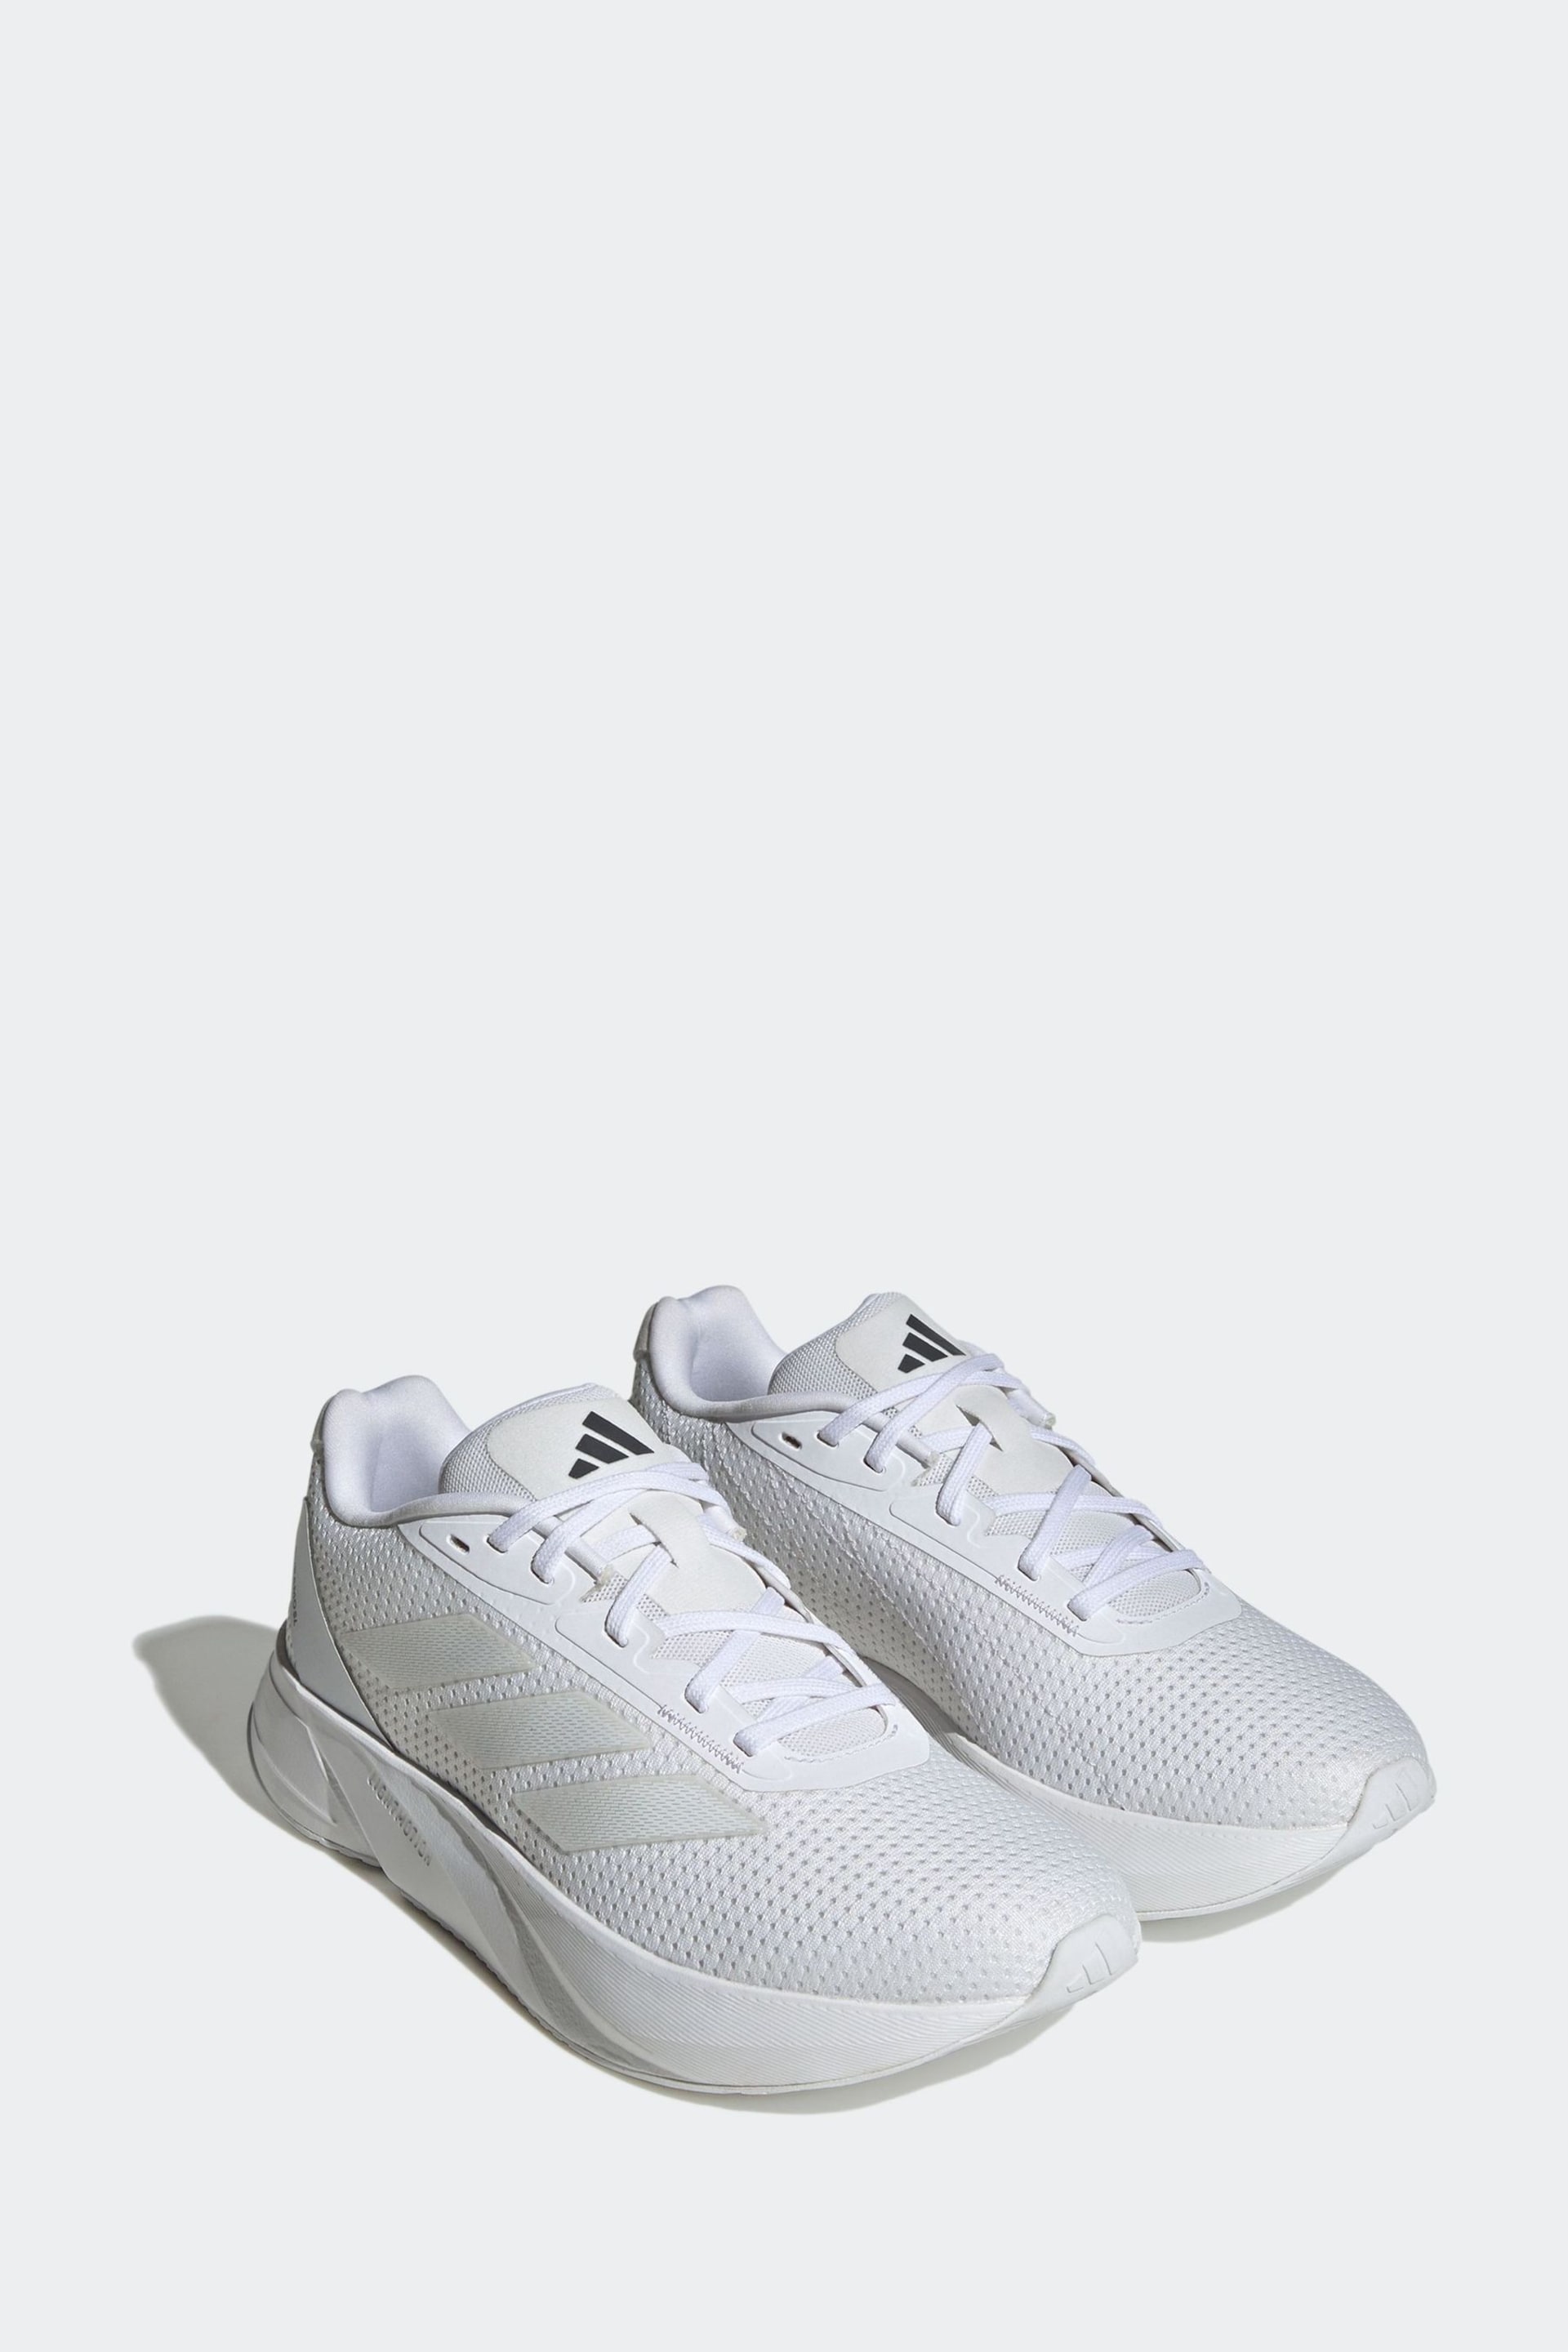 adidas Off White Duramo Running Shoes - Image 4 of 10